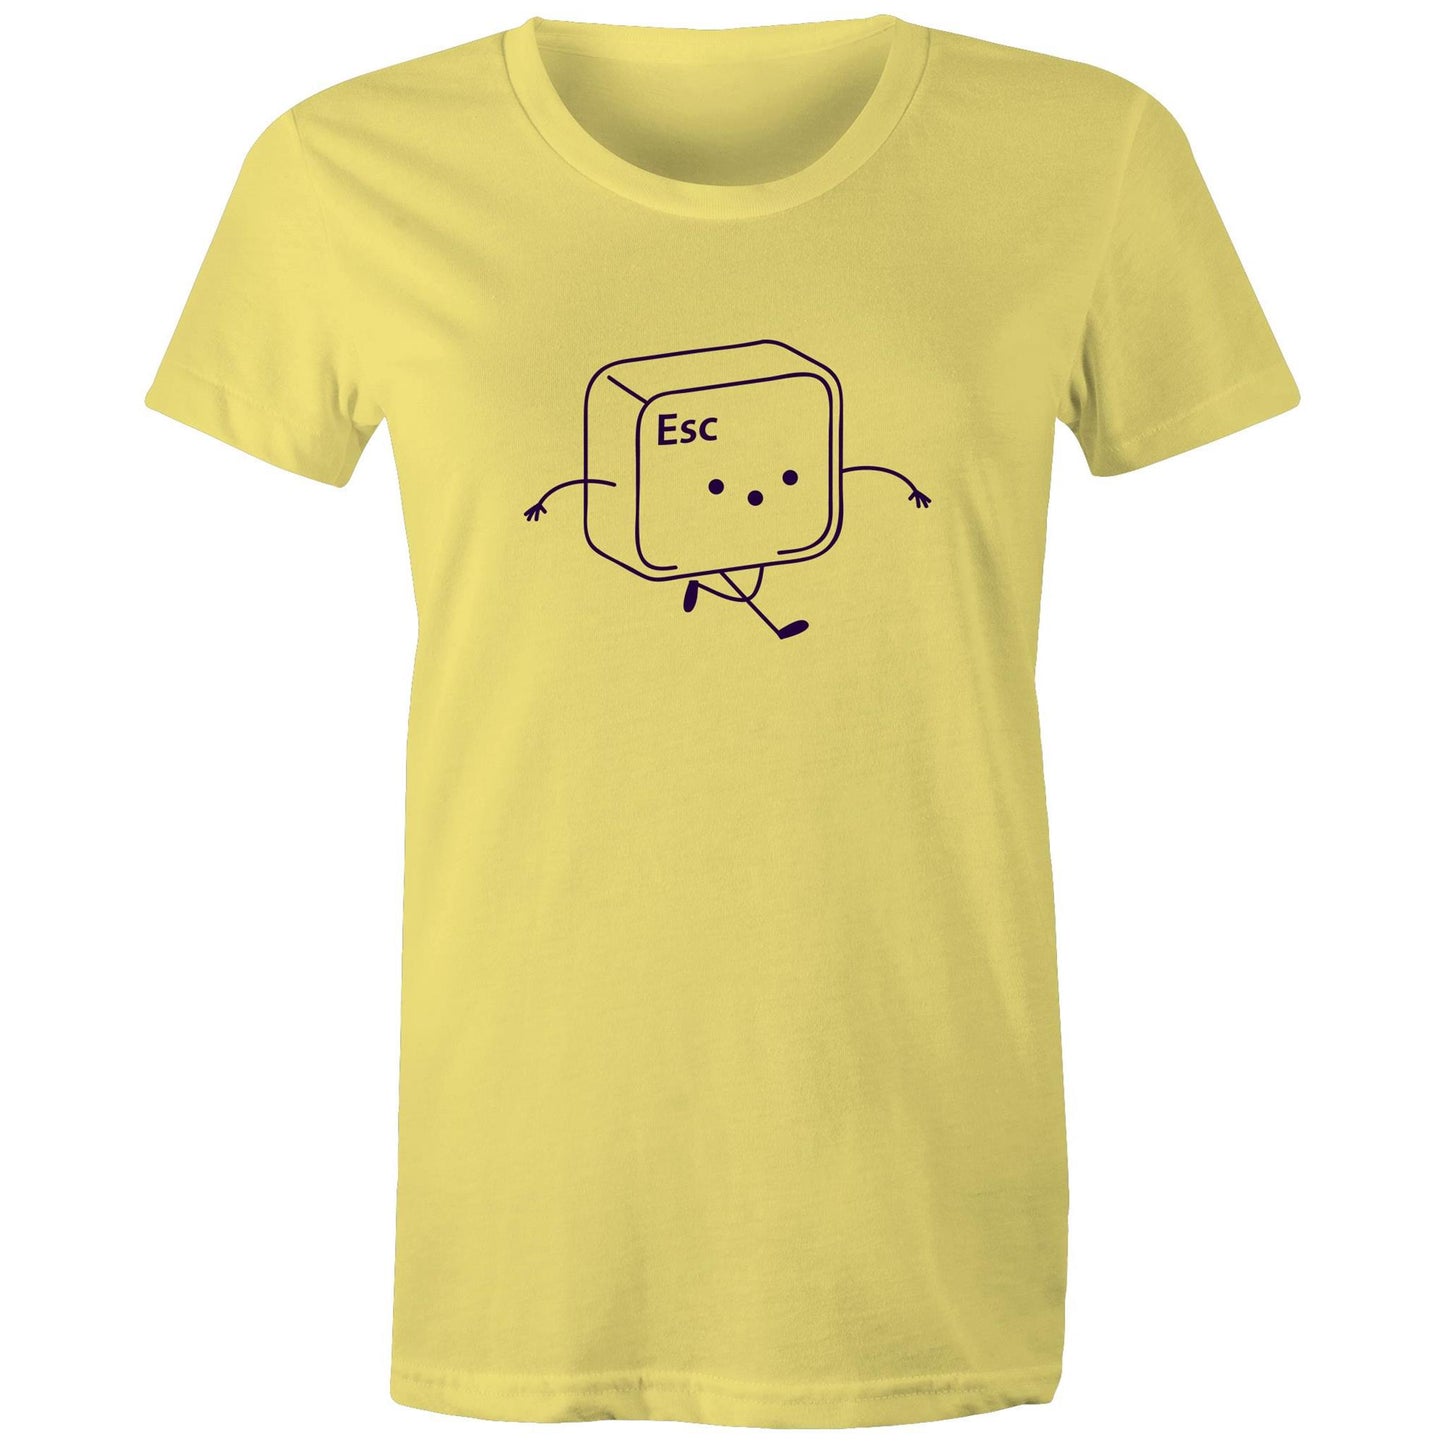 Esc, Escape Key - Womens T-shirt Yellow Womens T-shirt Tech